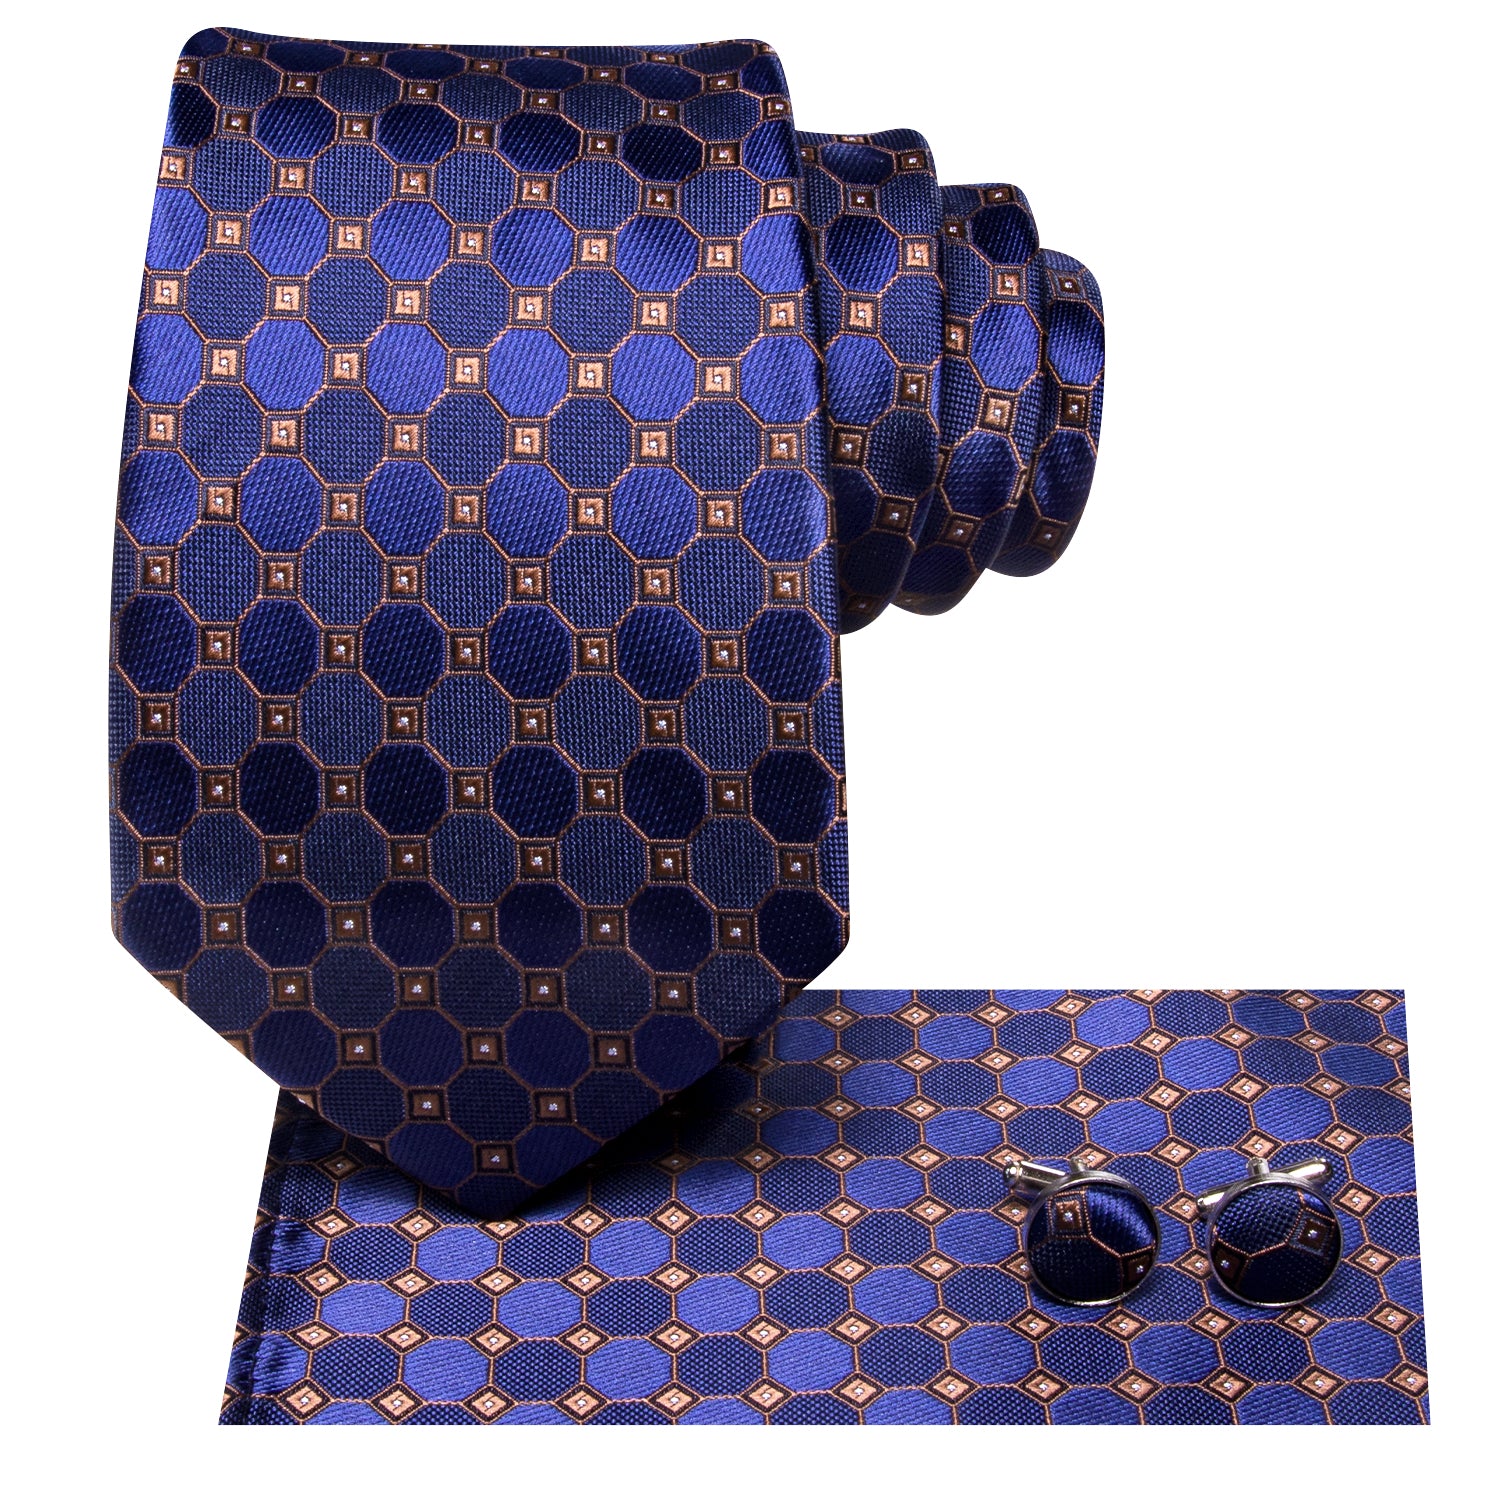 Hi-Tie New Purple Novelty Men's Tie Pocket Square Cufflinks Set